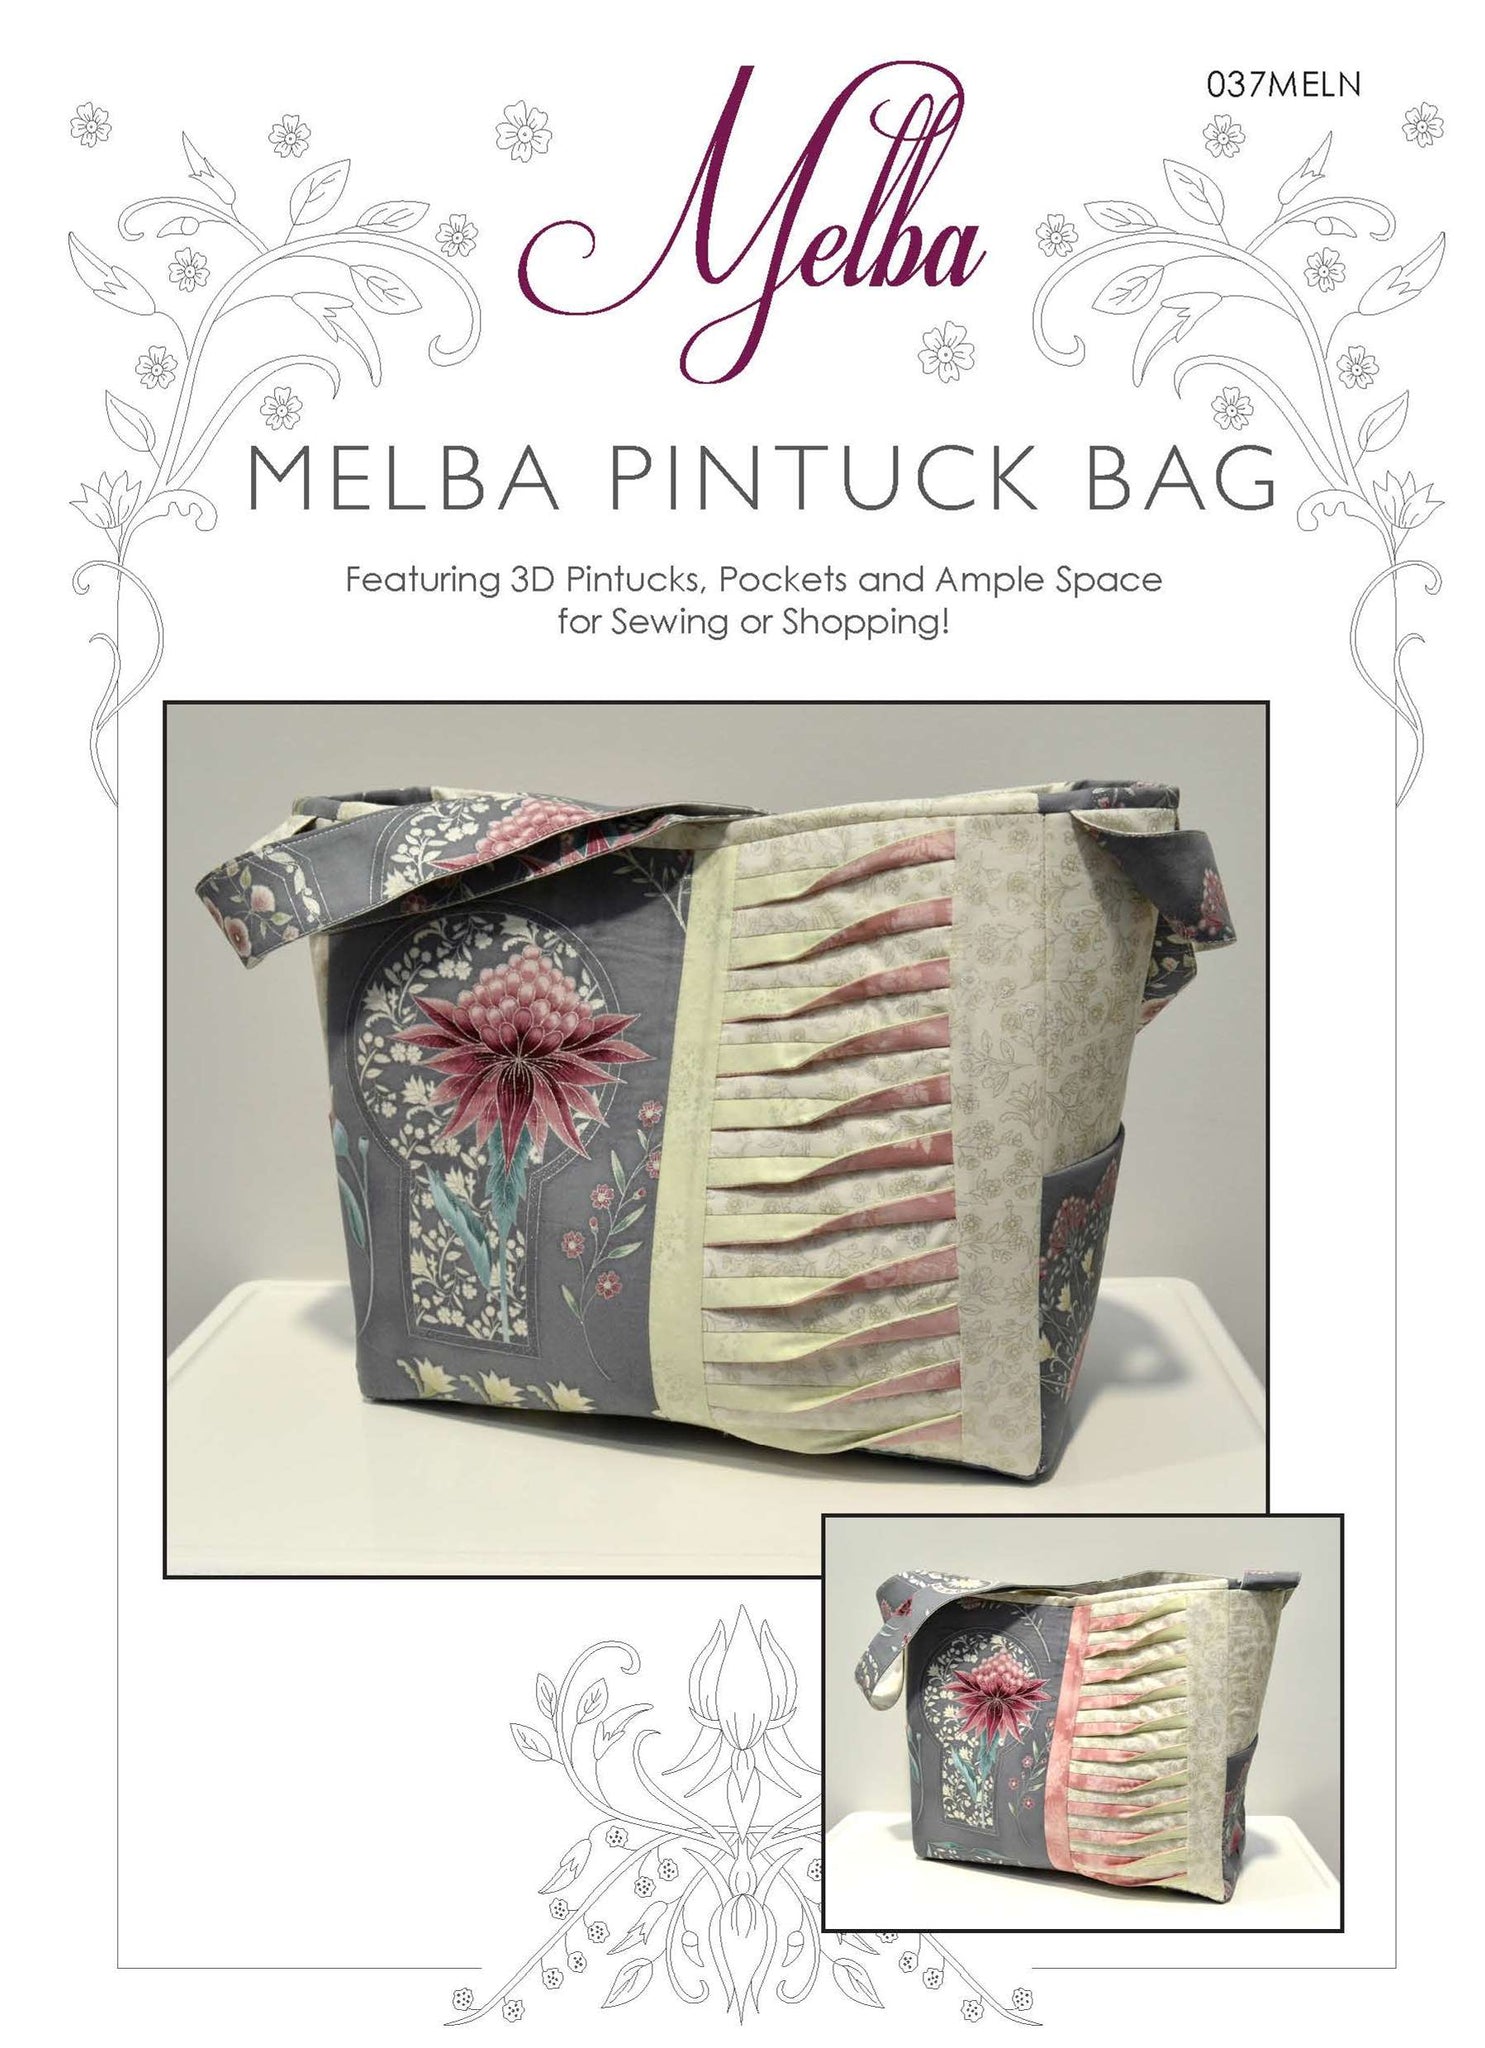 Pintuck Patchwork Bag - Melba Nouveau